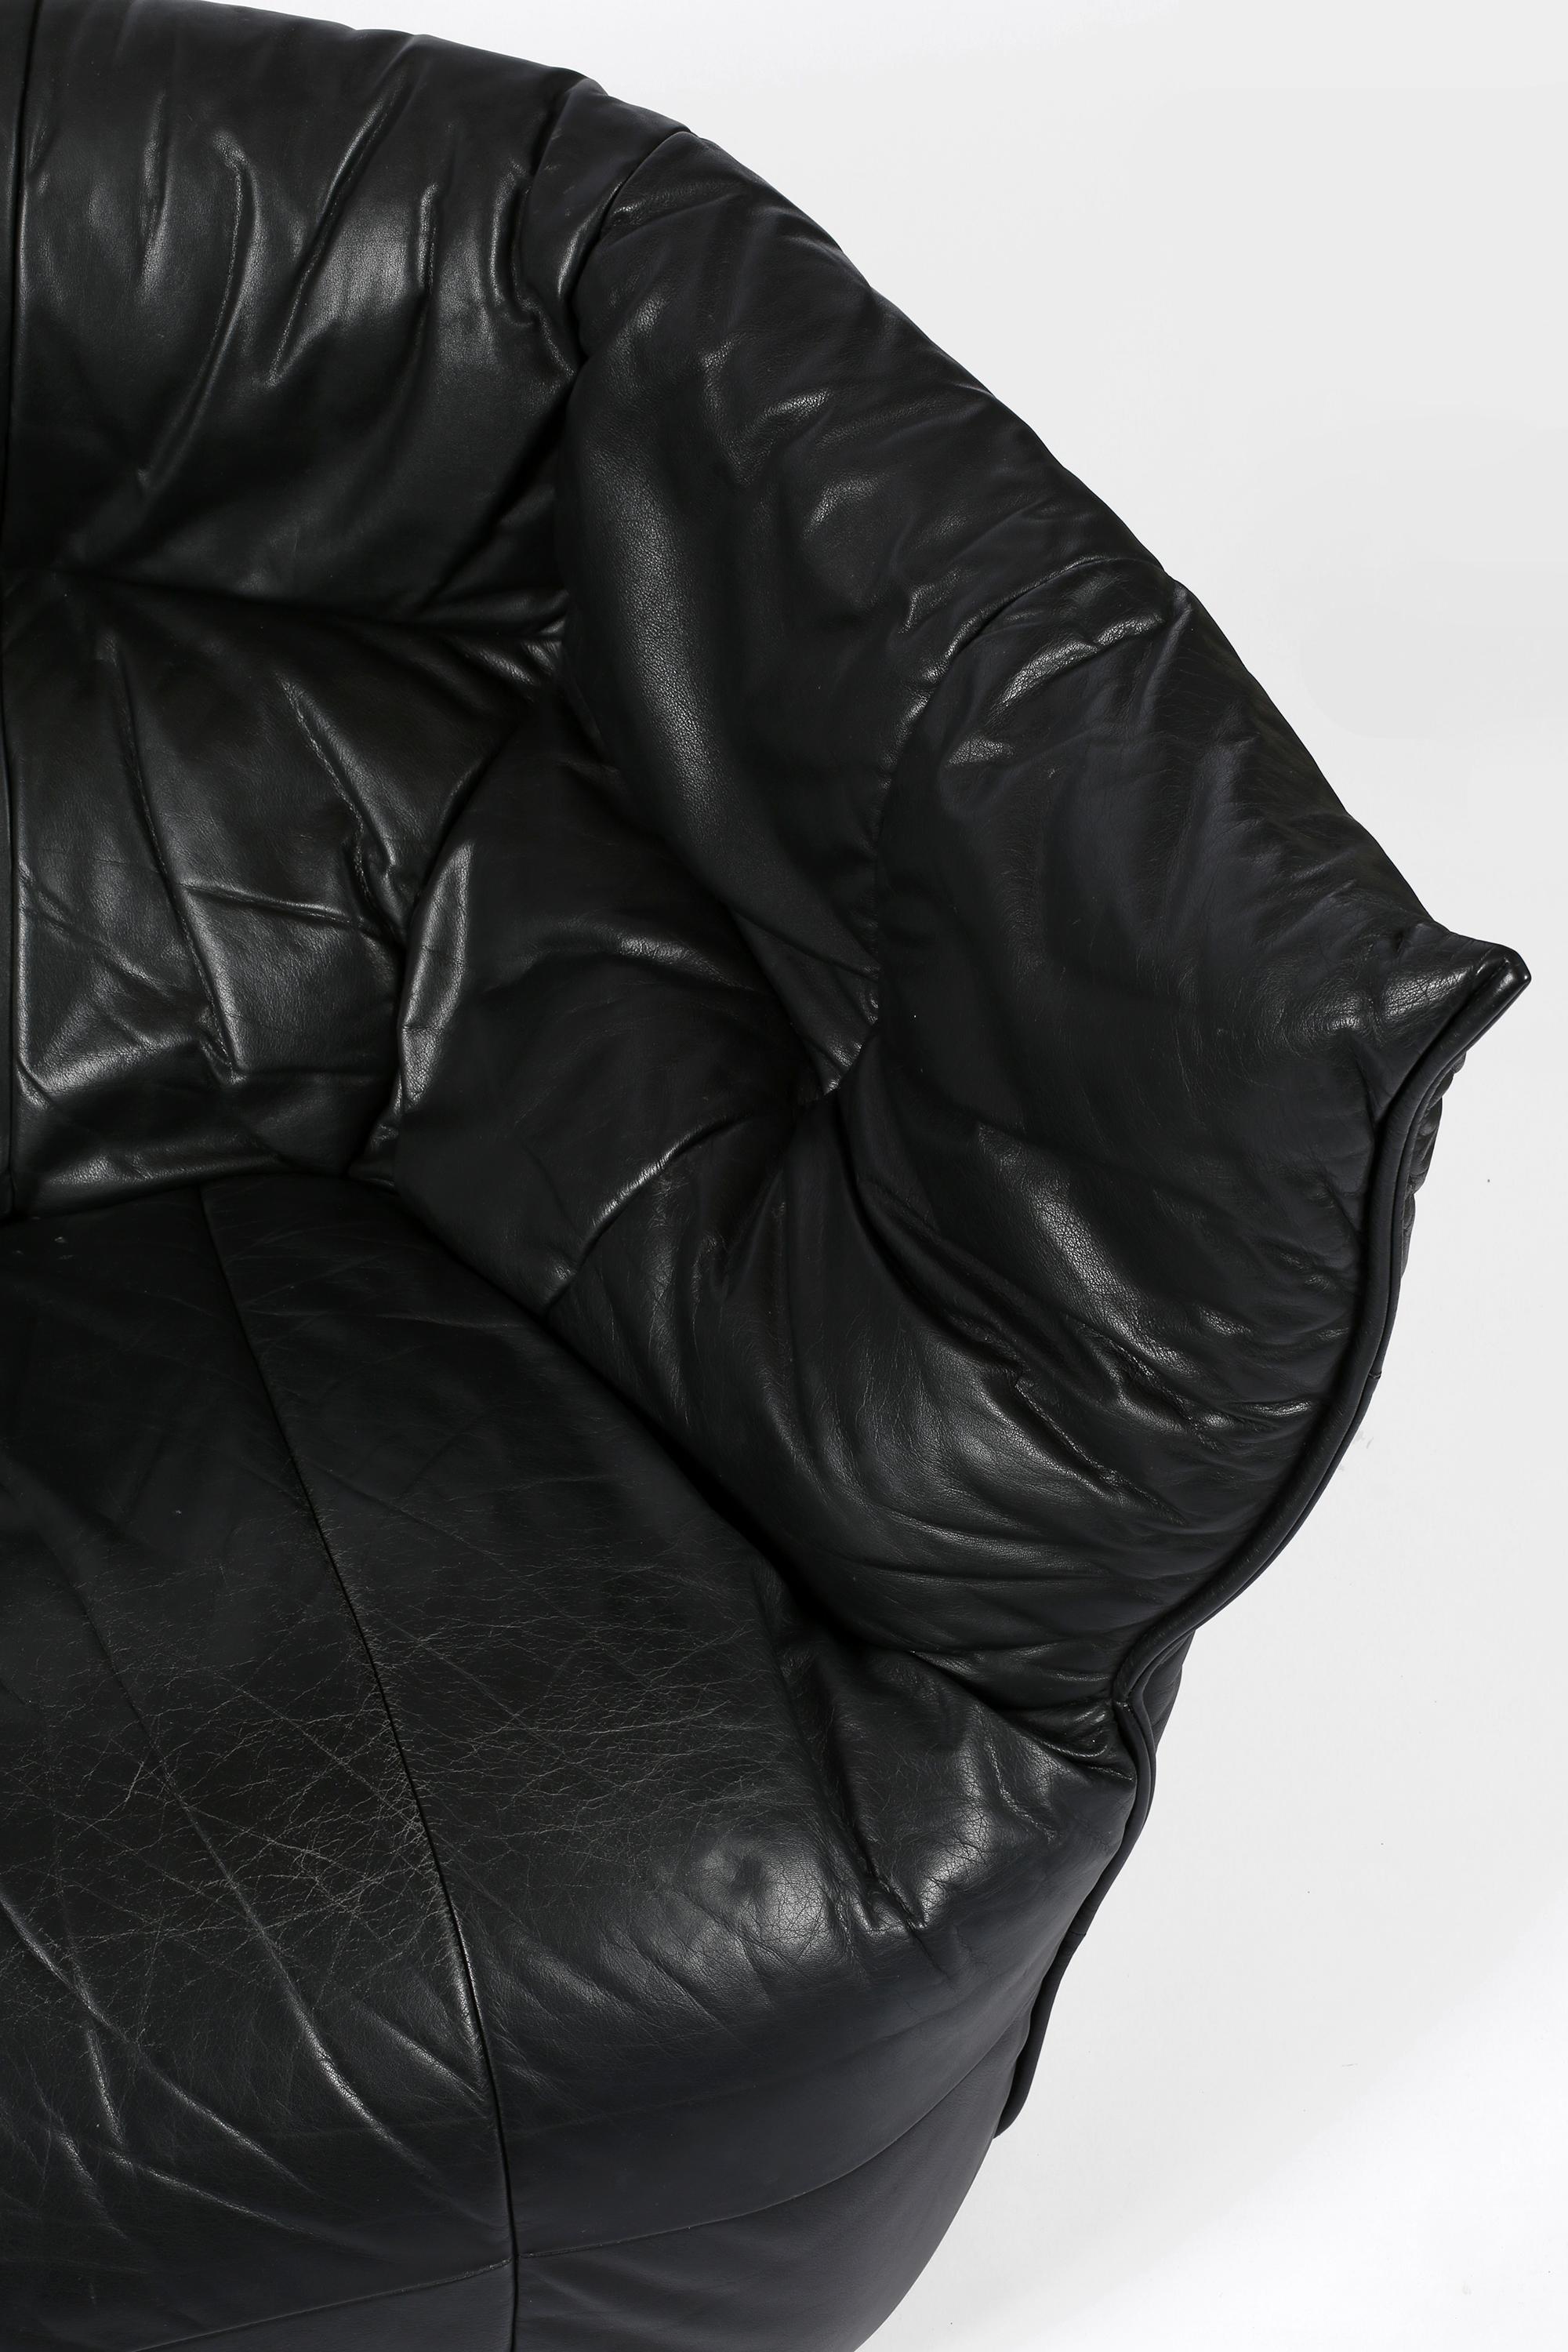 French 1980s Black Leather Brigantin Sofa by Michel Ducaroy for Lignet Roset For Sale 2